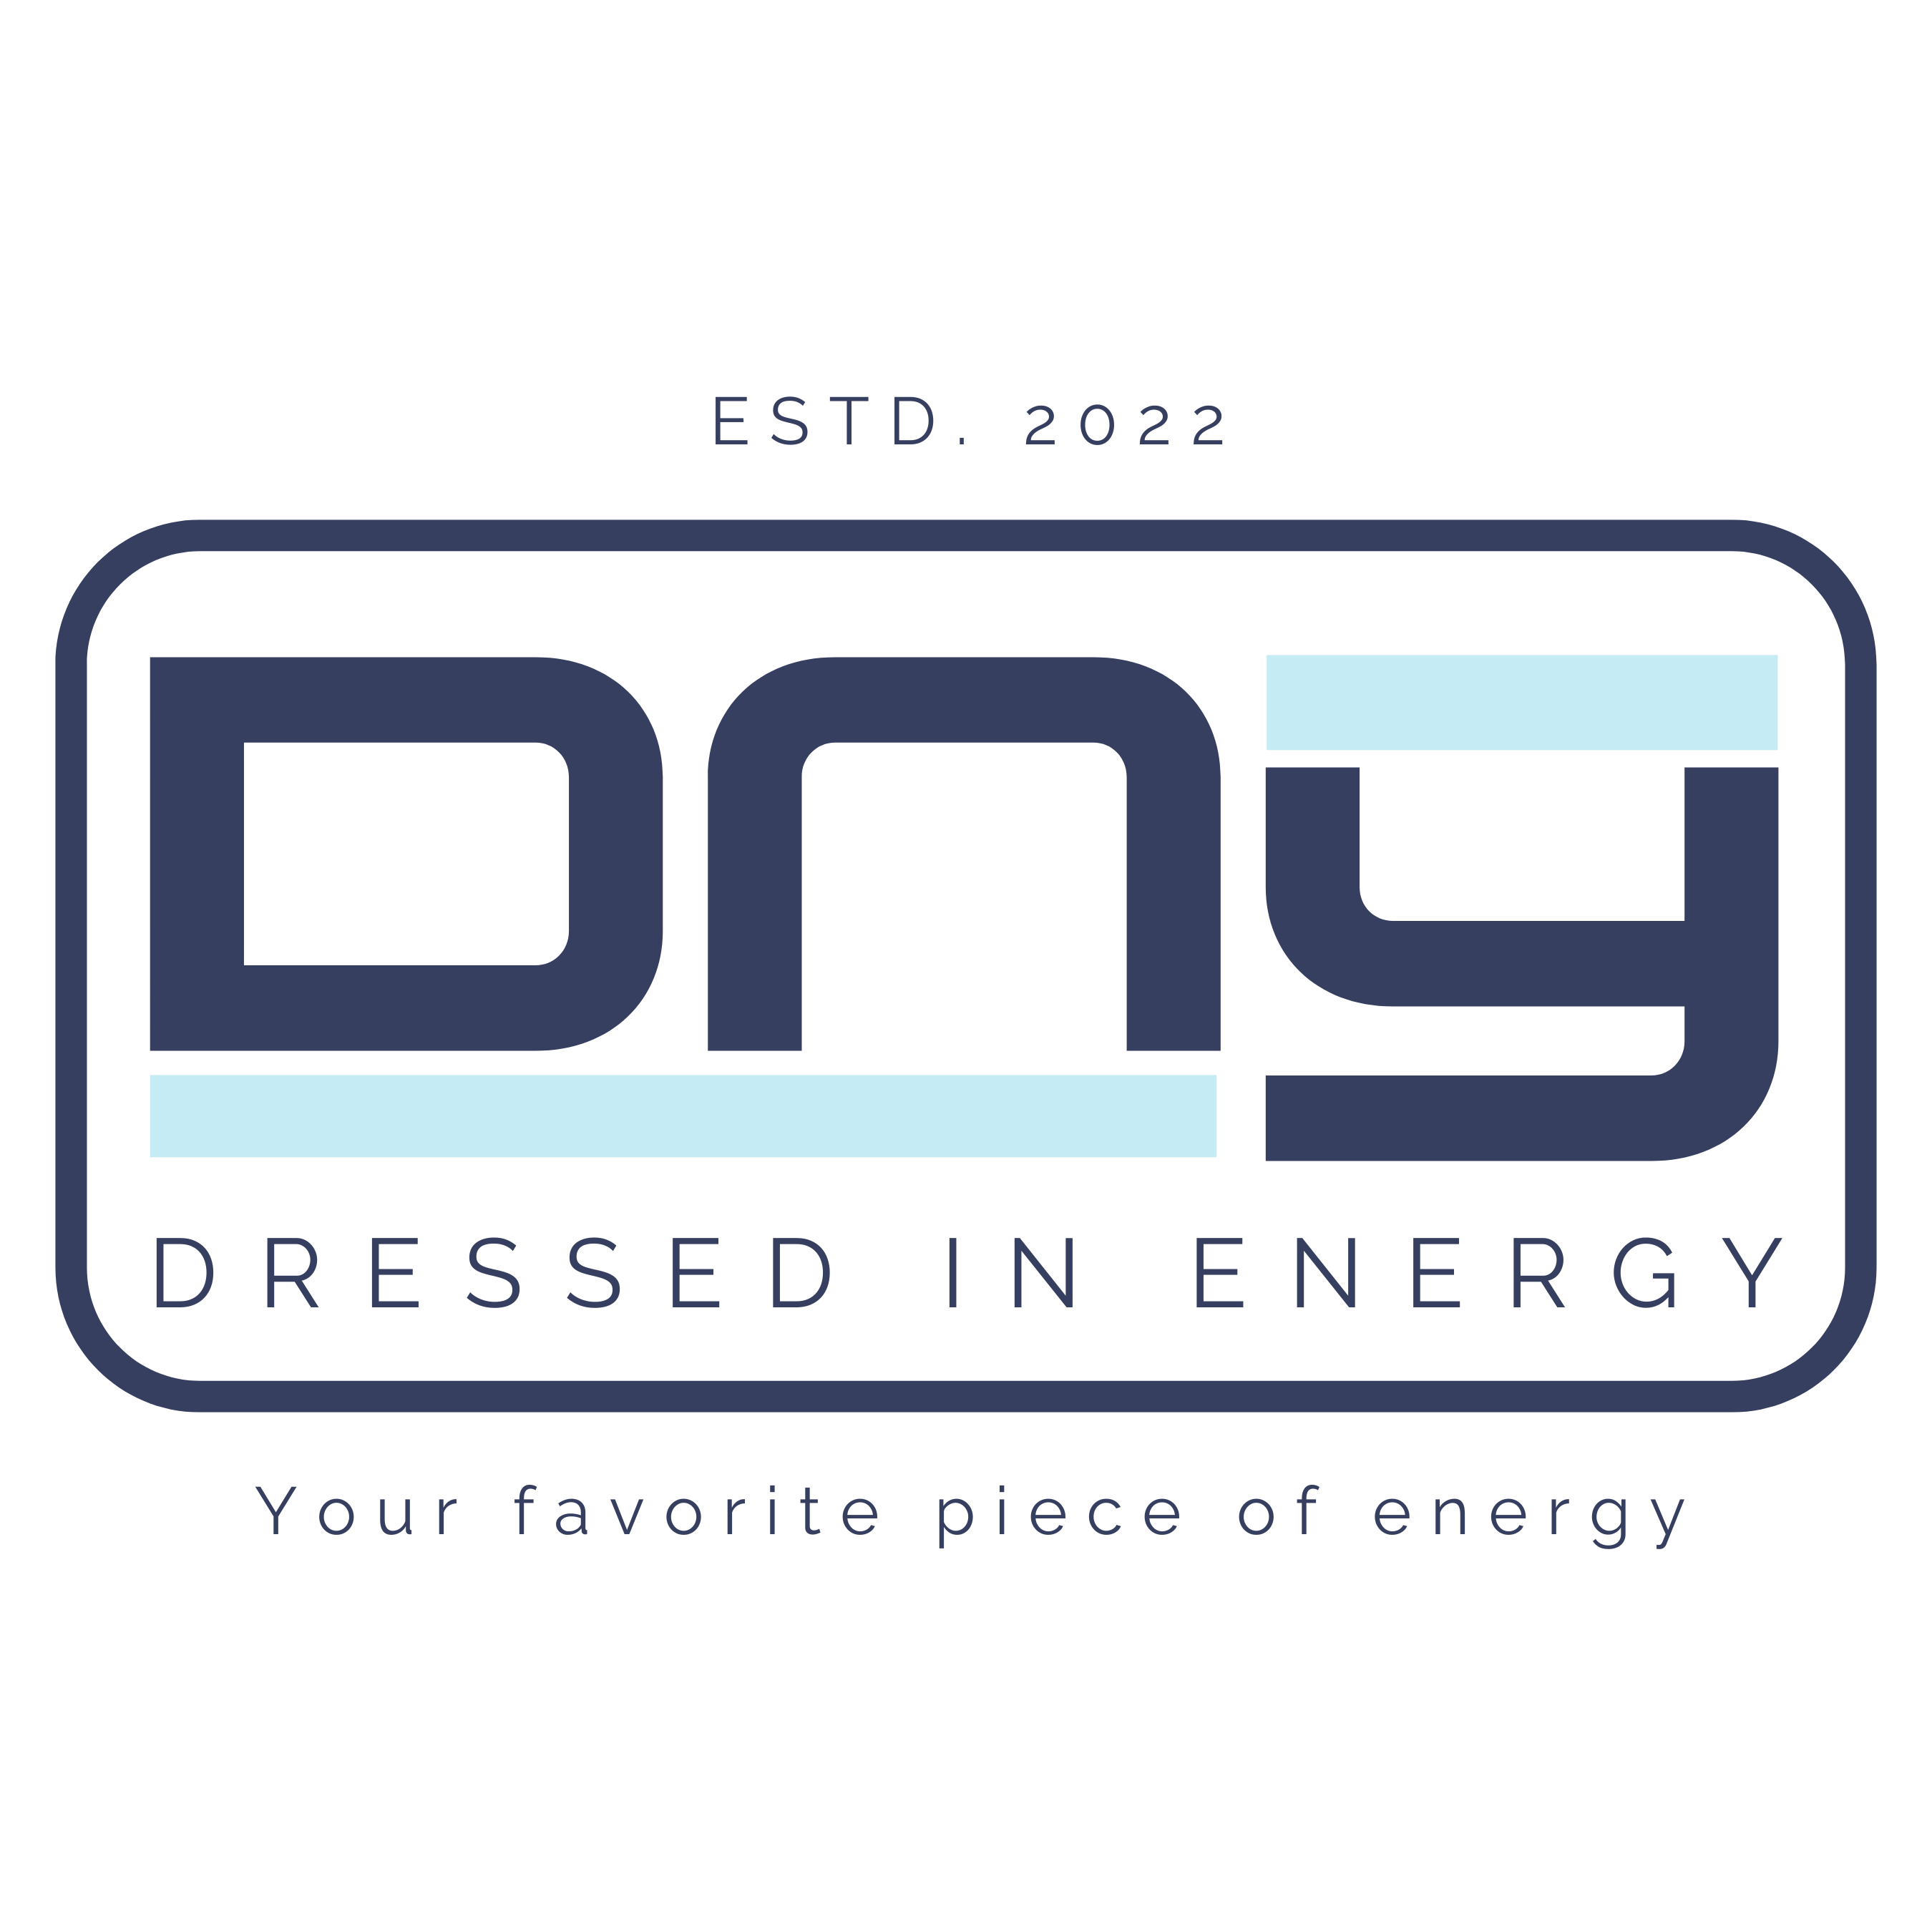 Dressed in Energy